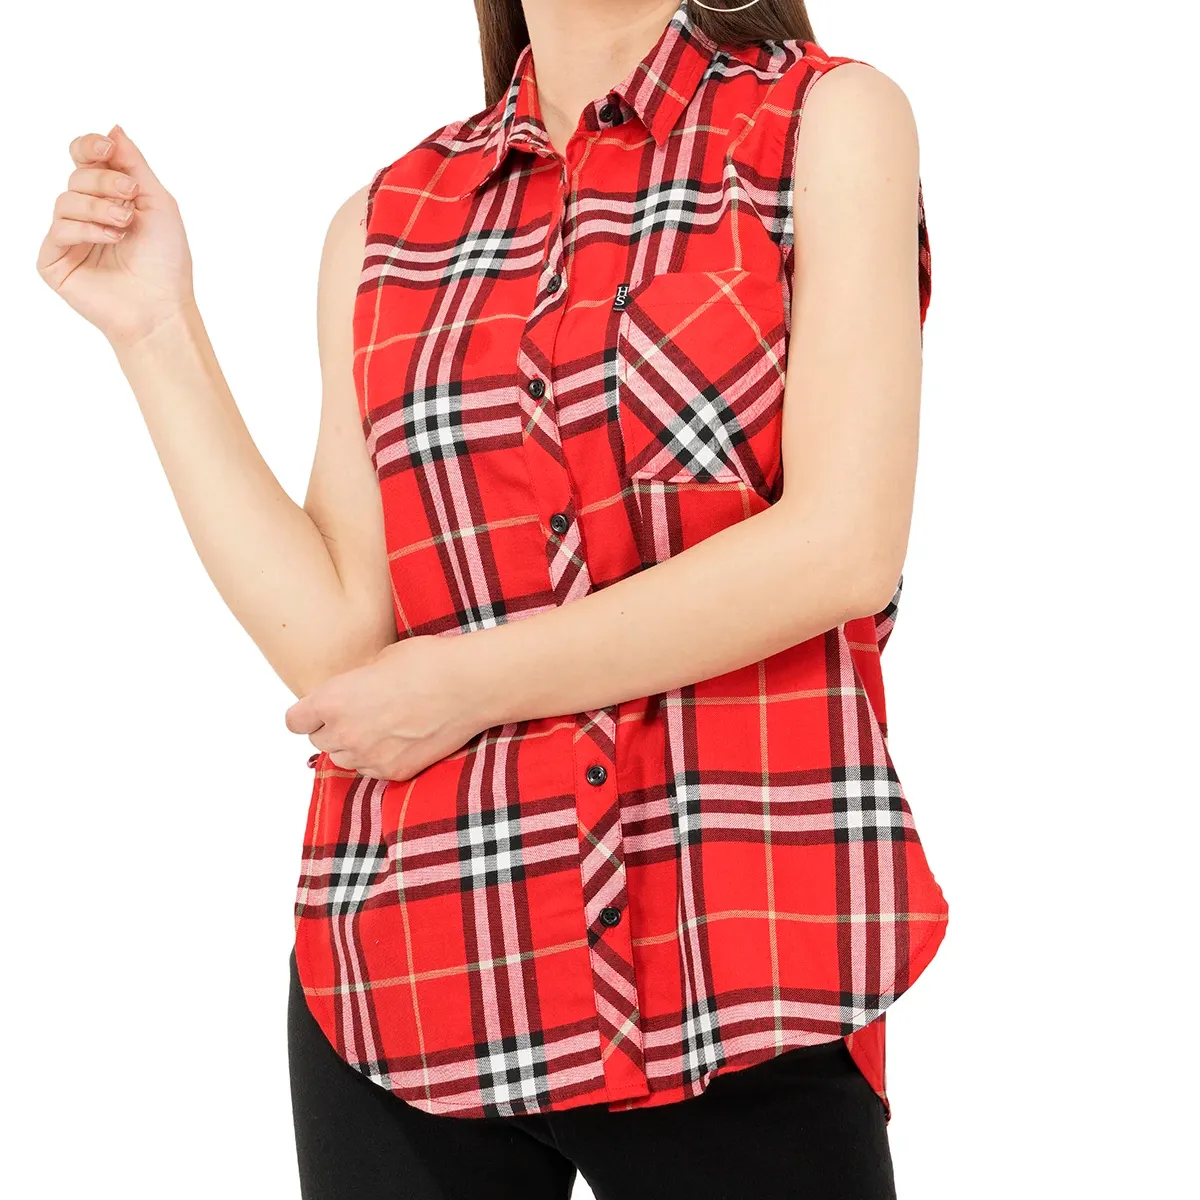 Bestseller Women's Casual Cotton Checkered Sleeveless Top Logo Decoration Red Stylish Shirt Collar Reasonable Price Wholesale